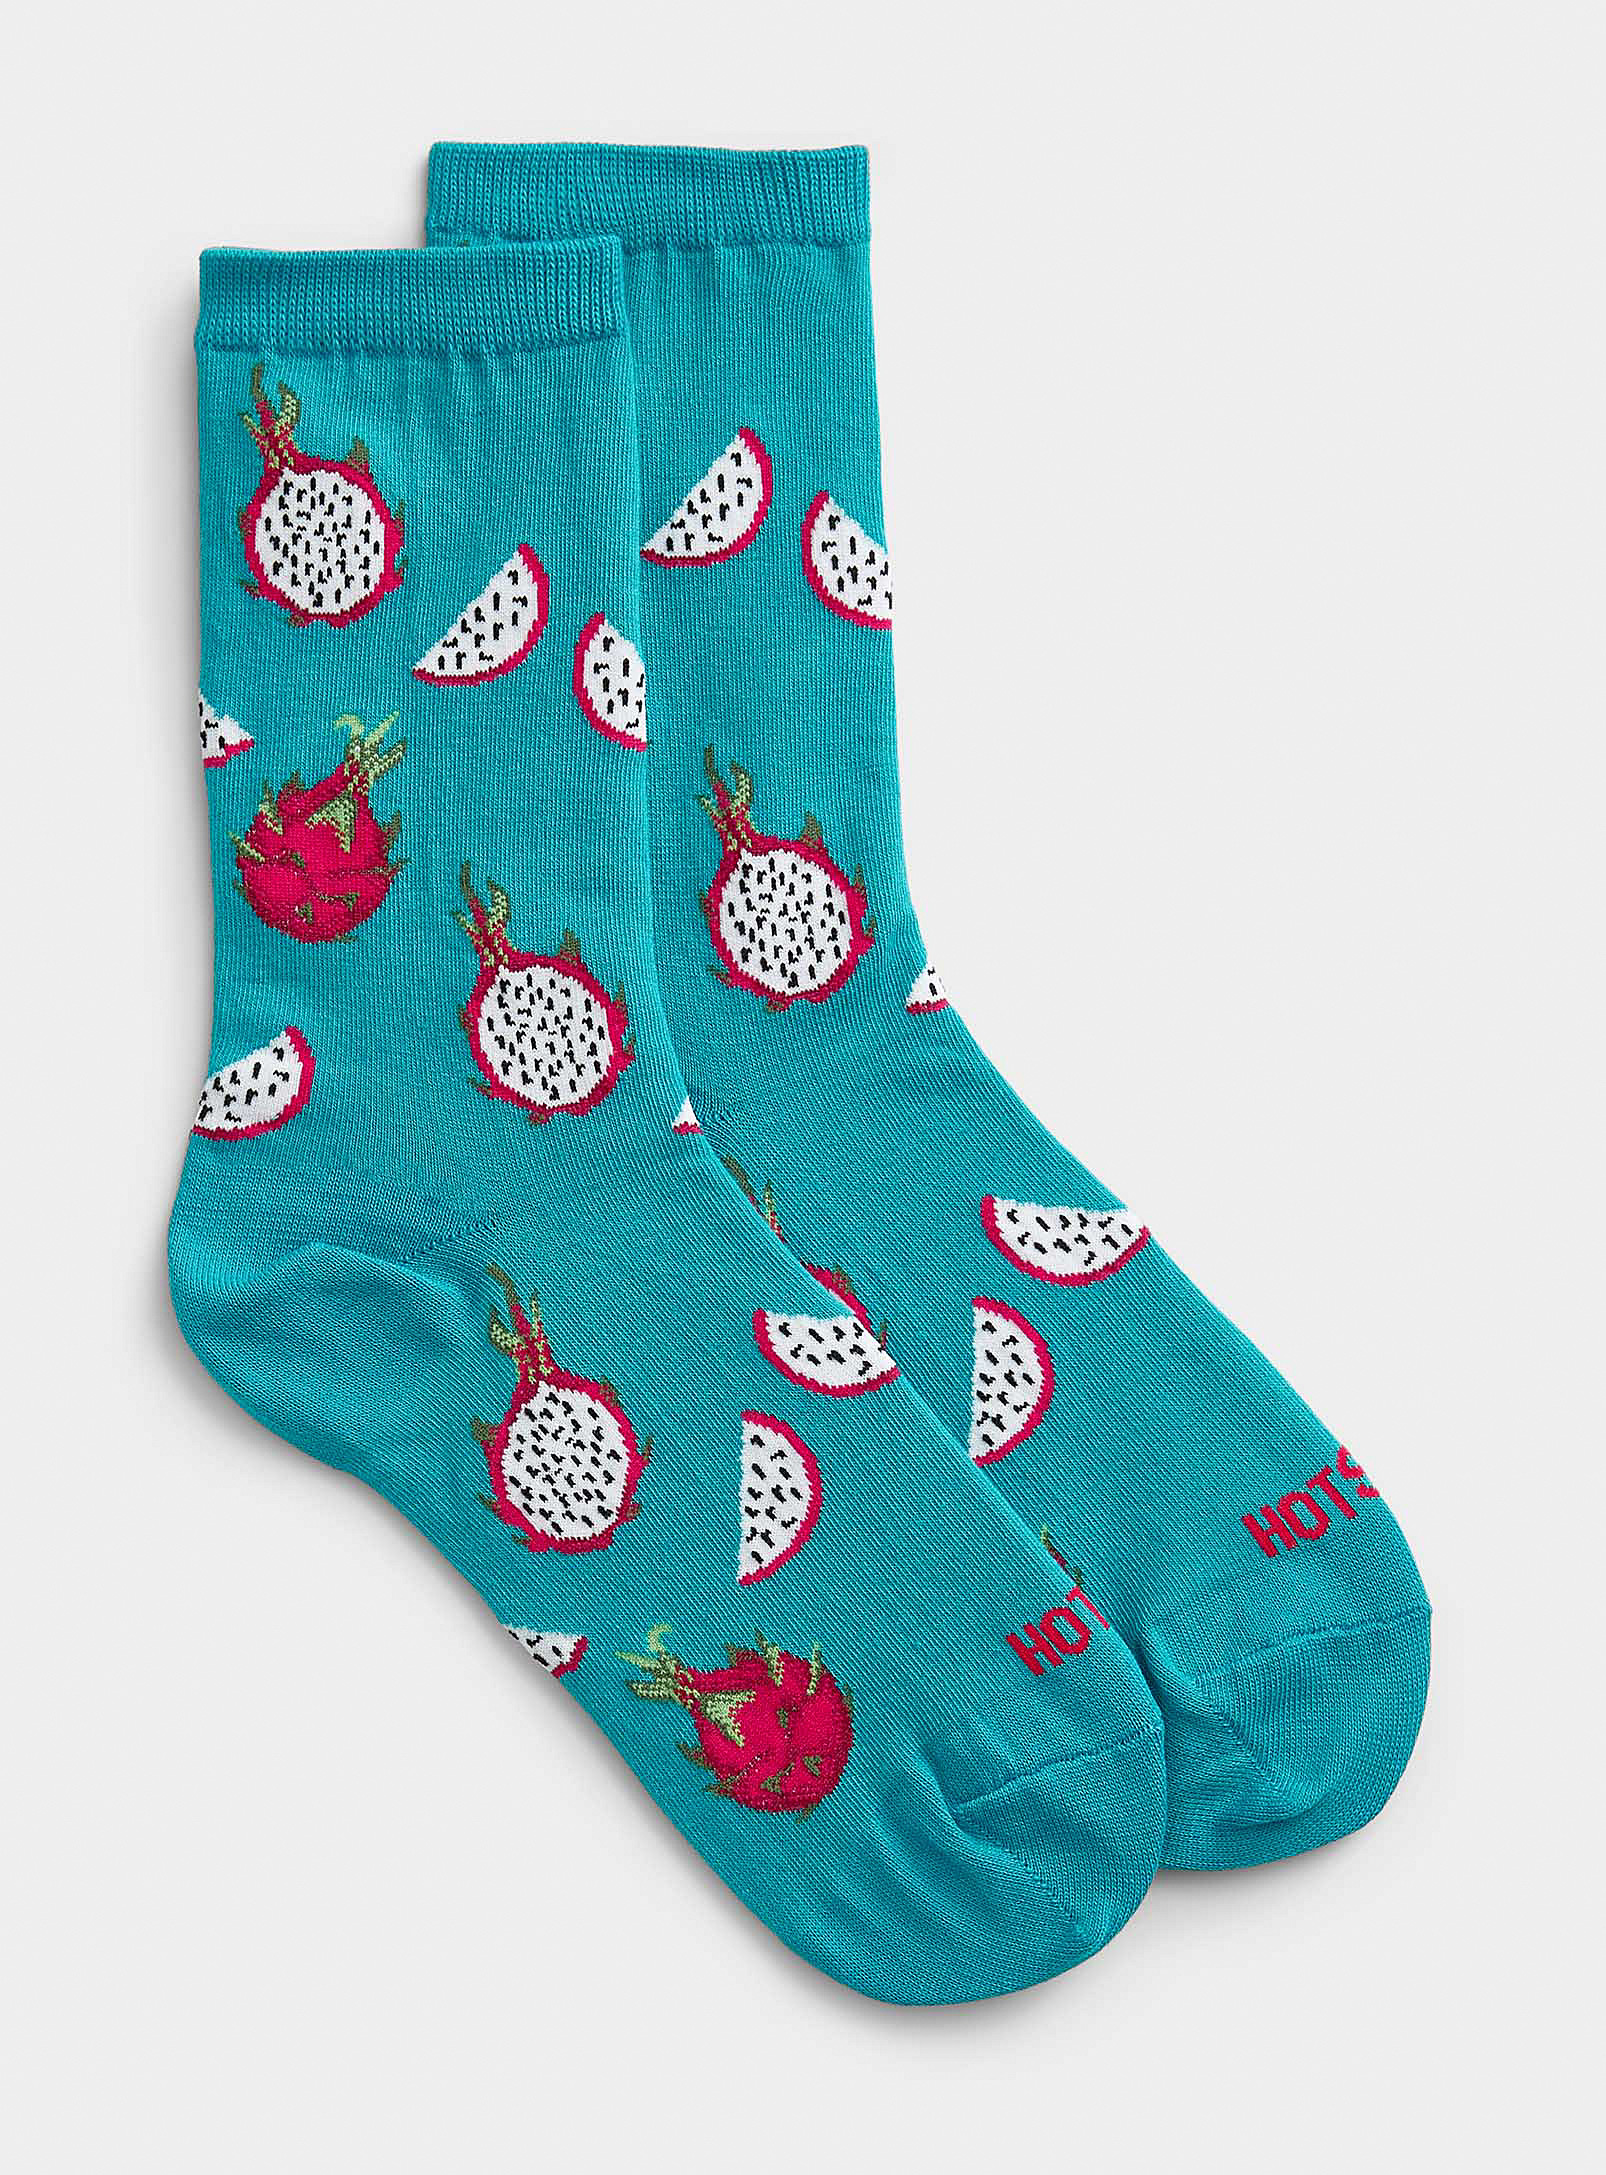 Hot Sox - Women's Dragon fruit sock